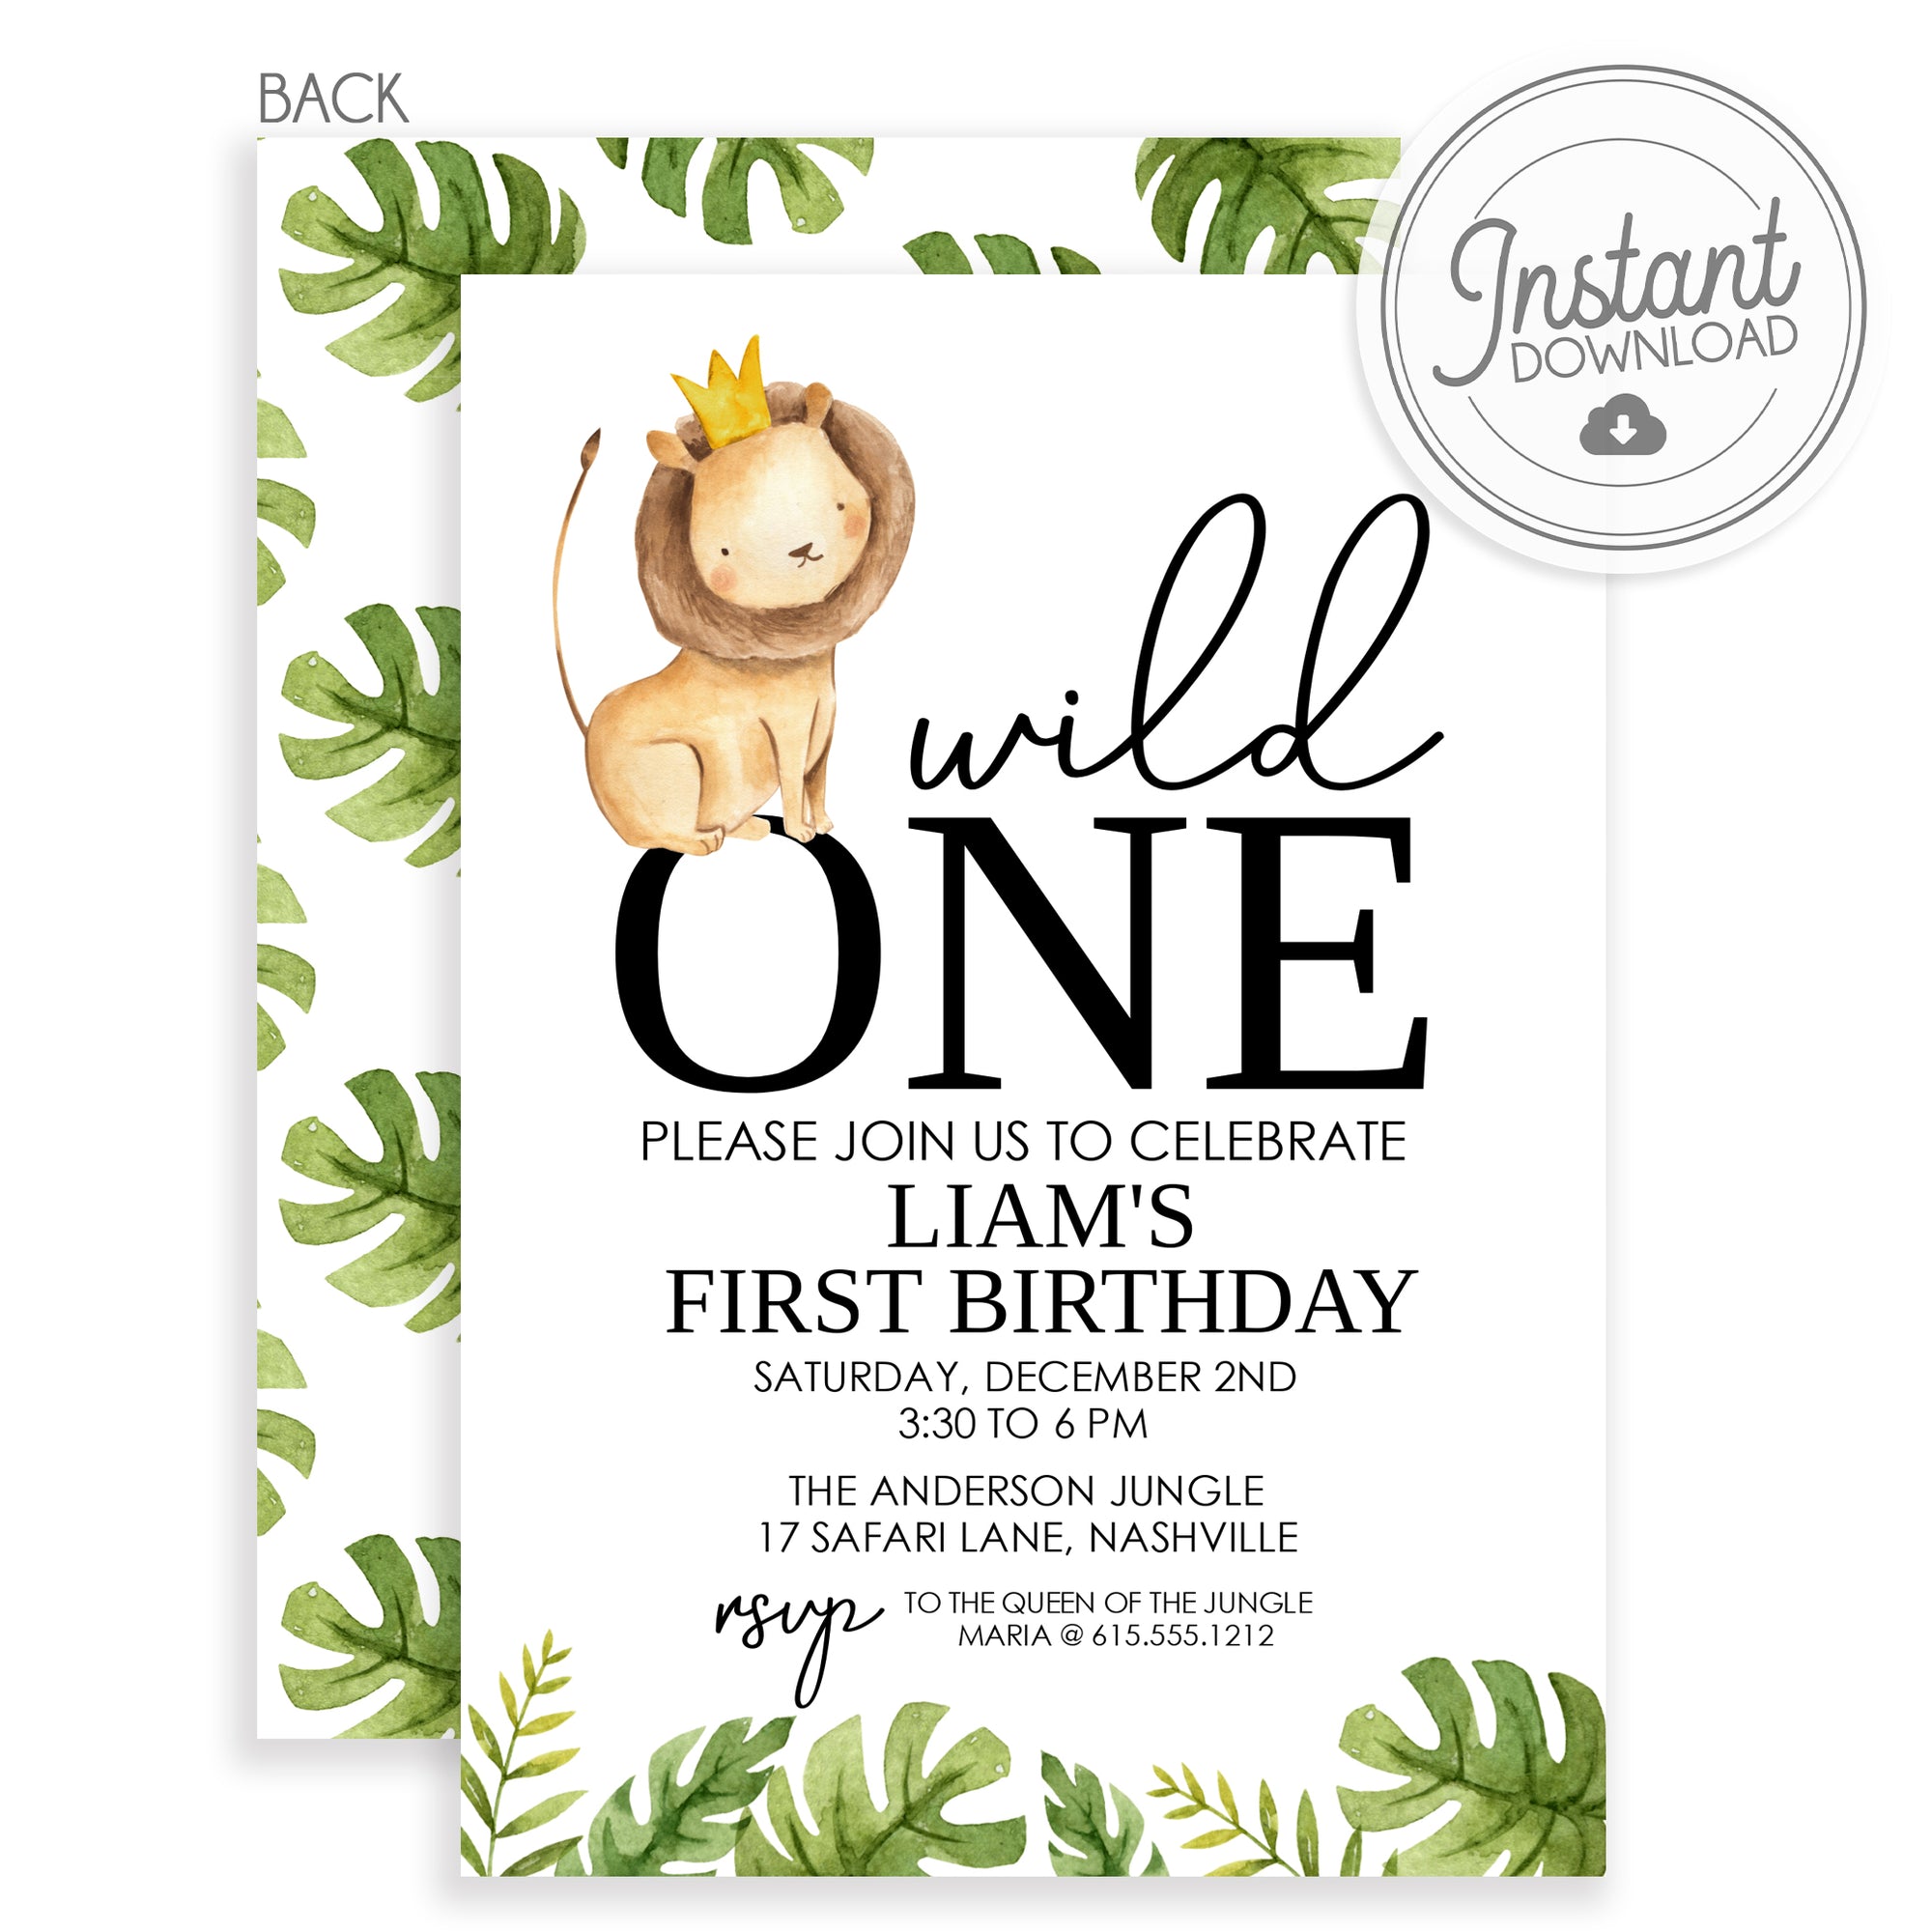 Wild ONE first birthday invitation, DIY Instant dowload using Templett, PIPSY.COM